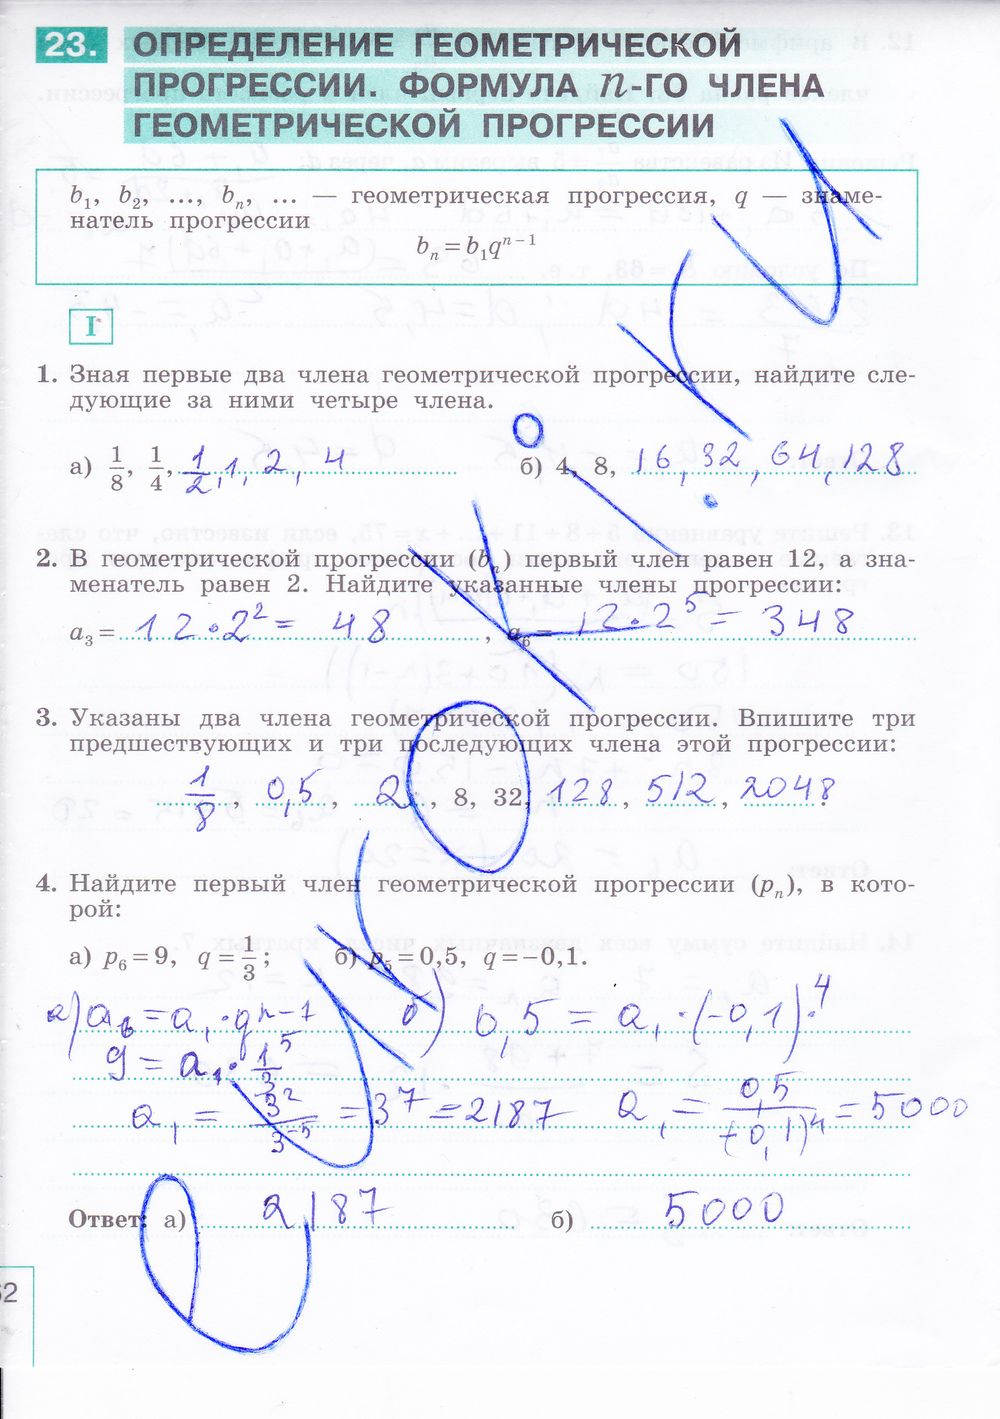 ГДЗ Алгебра 9 класс - стр. 62